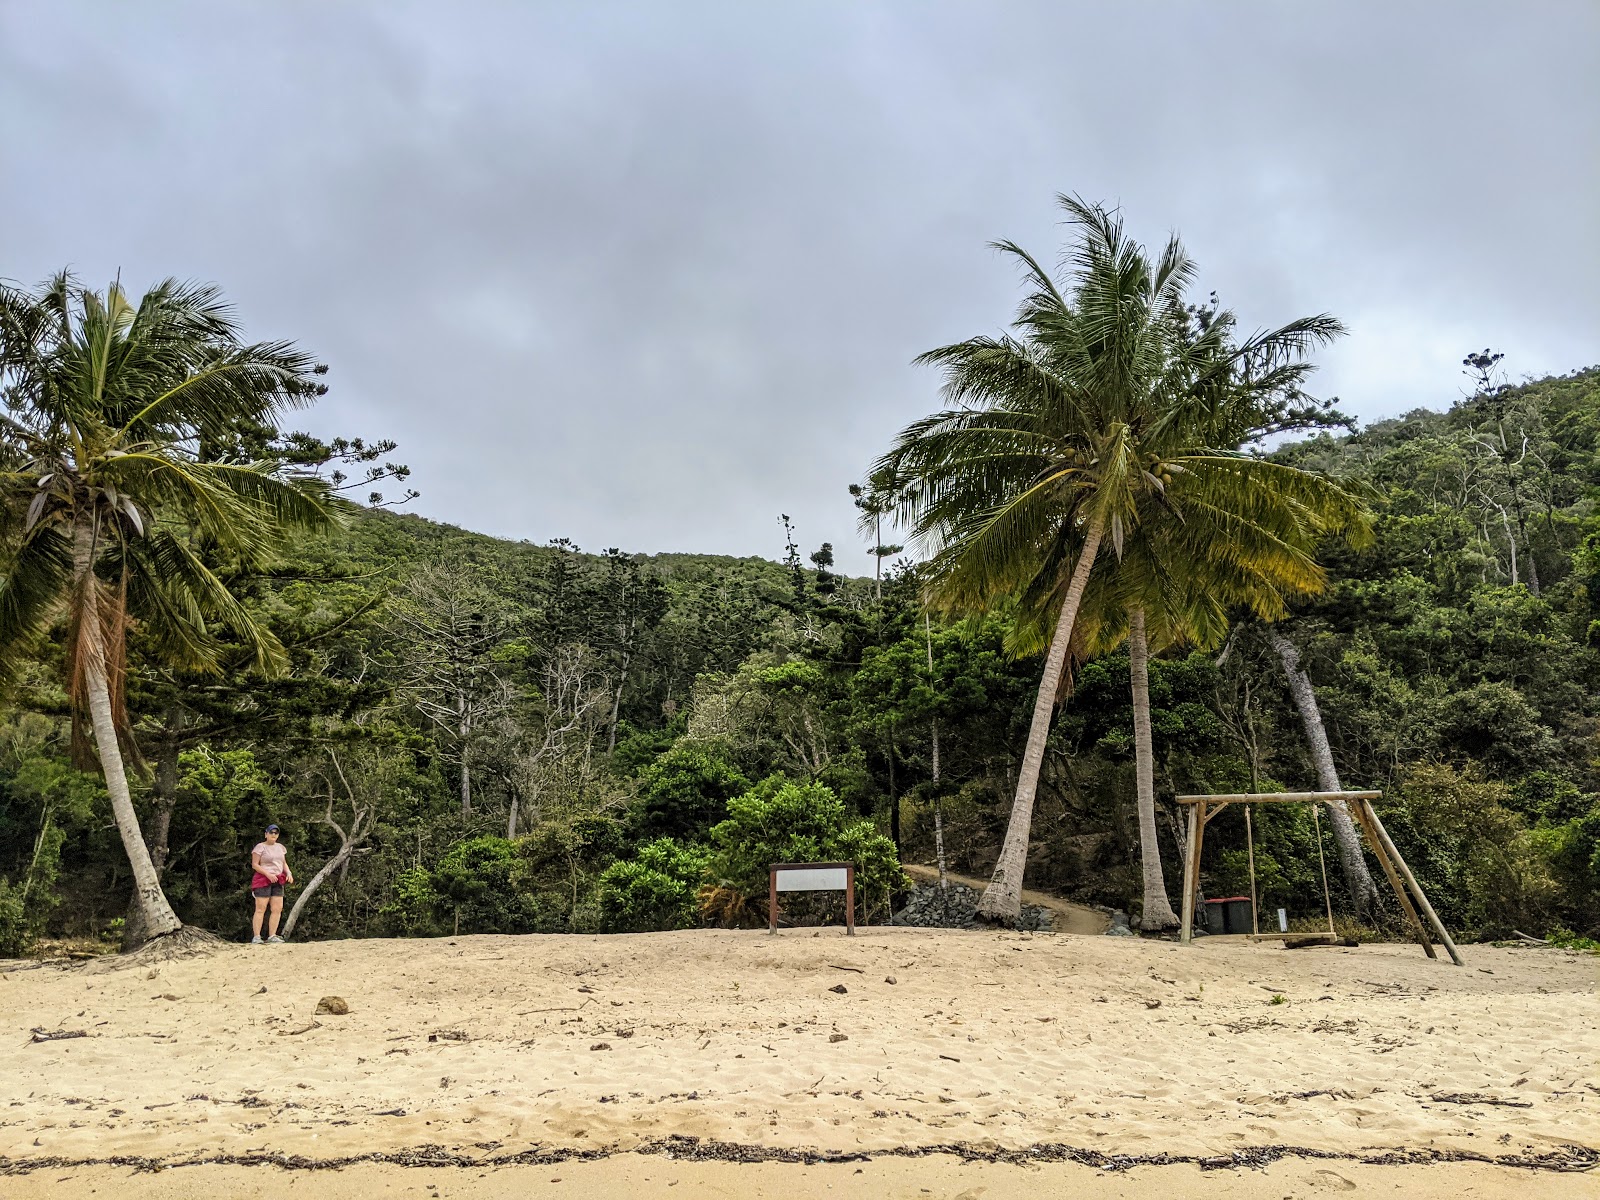 Fotografie cu Coral Cove Beach - locul popular printre cunoscătorii de relaxare